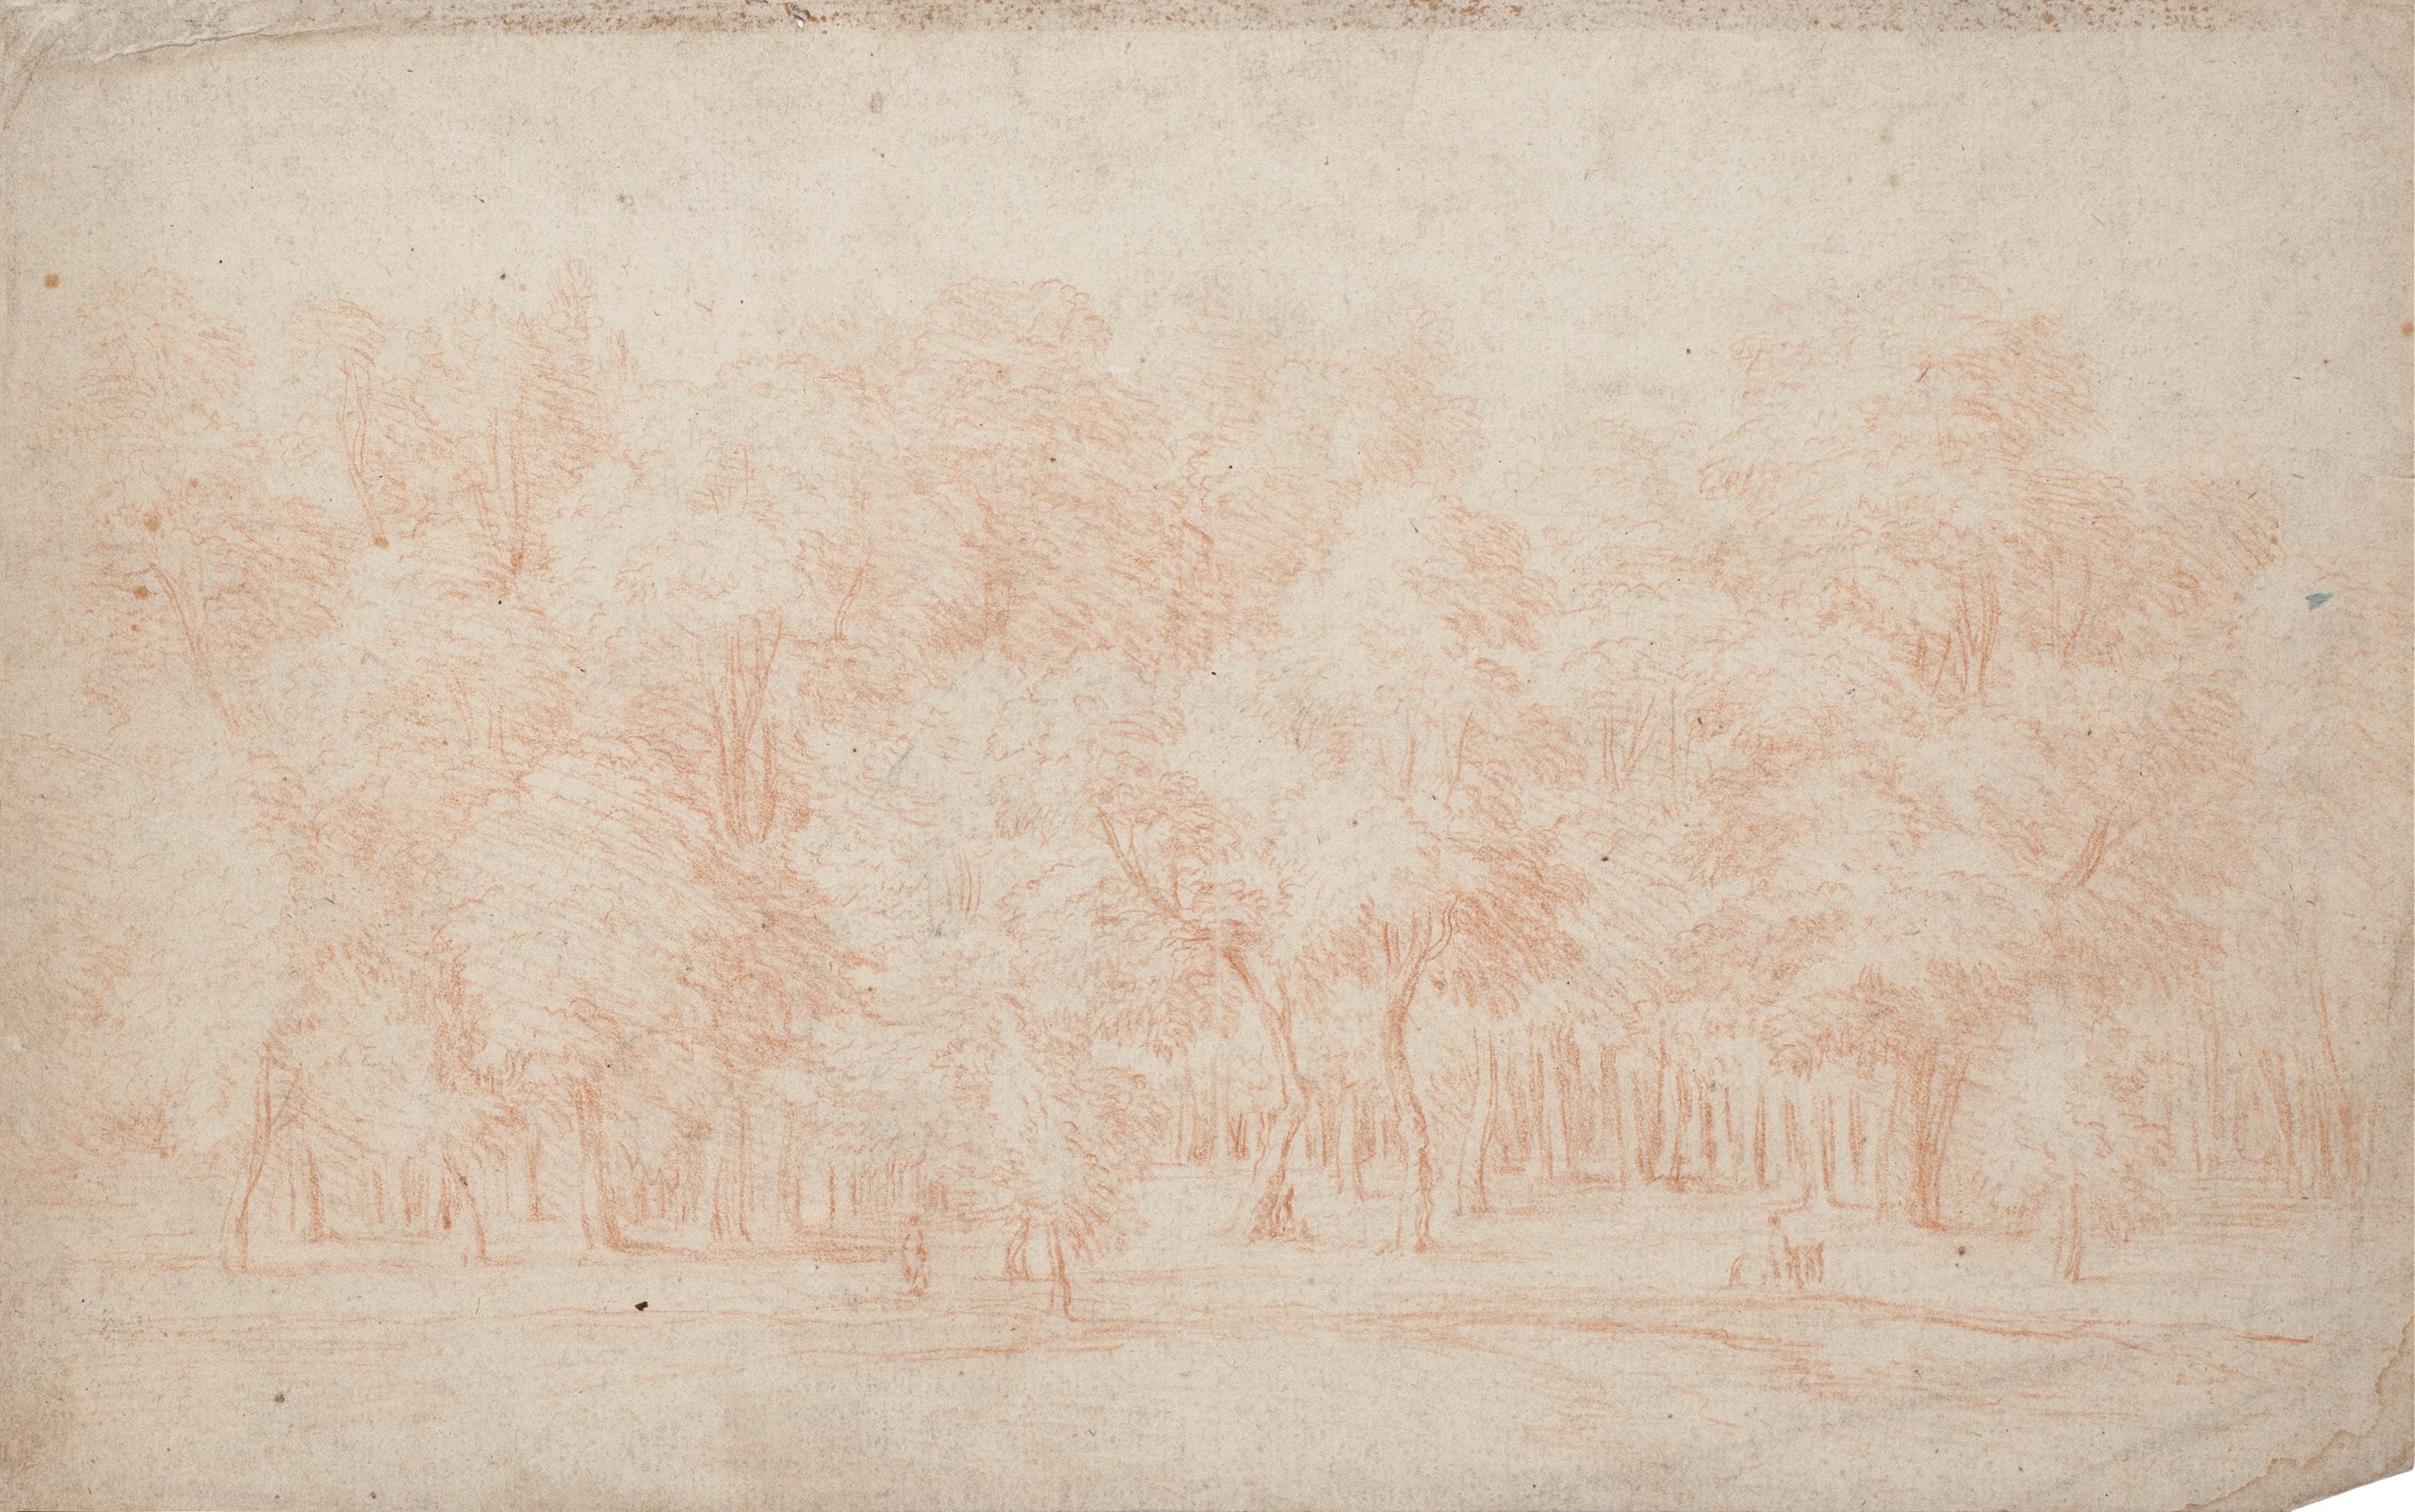 Unknown Landscape Art - Forest - Original Sanguine Drawing - 18th Century